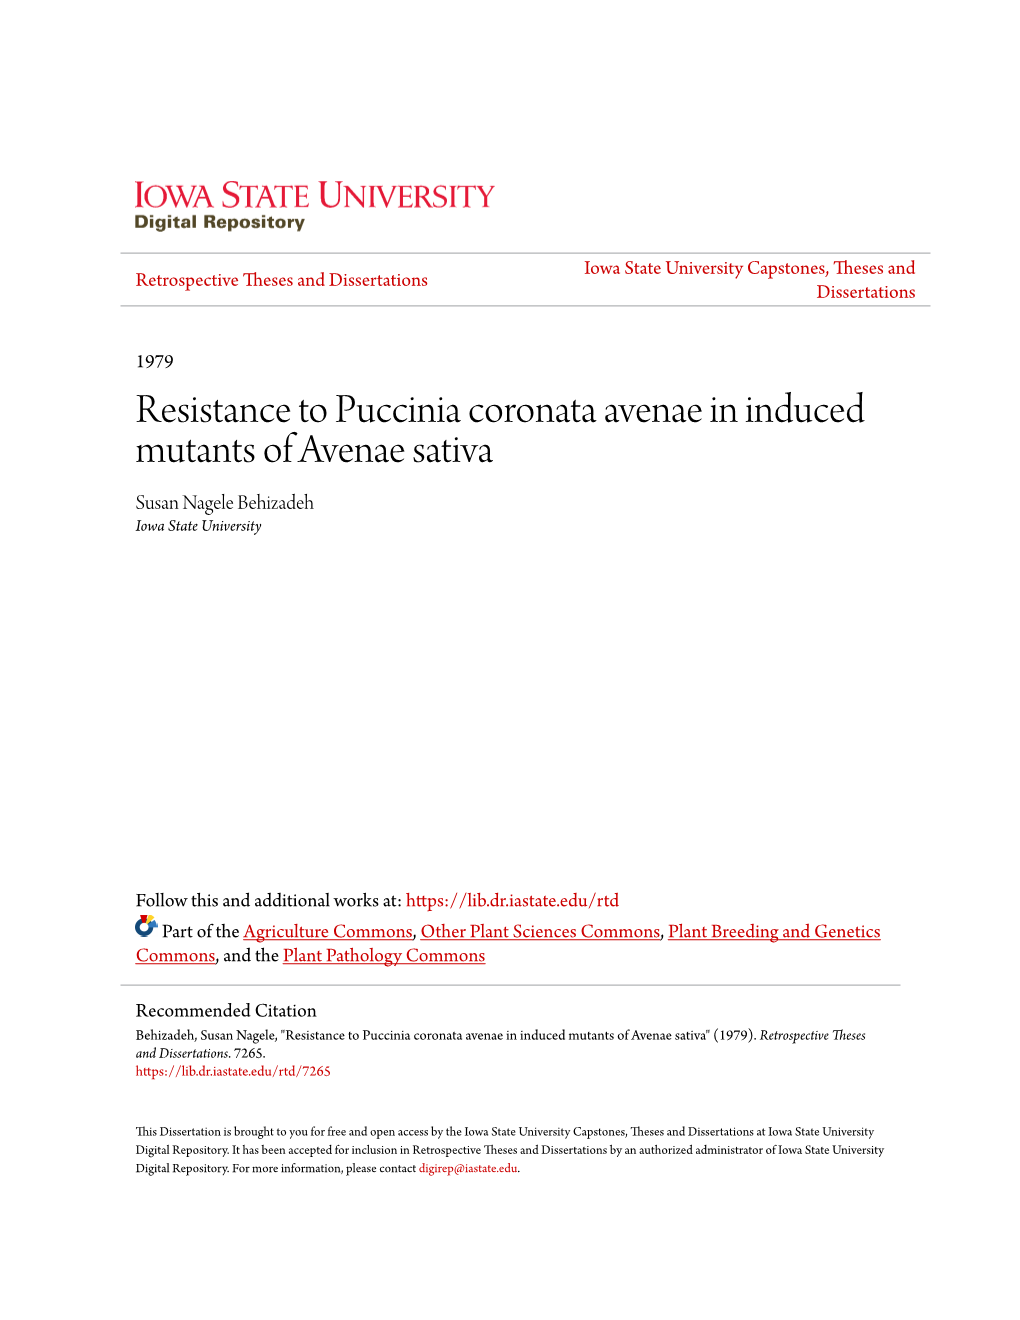 Resistance to Puccinia Coronata Avenae in Induced Mutants of Avenae Sativa Susan Nagele Behizadeh Iowa State University